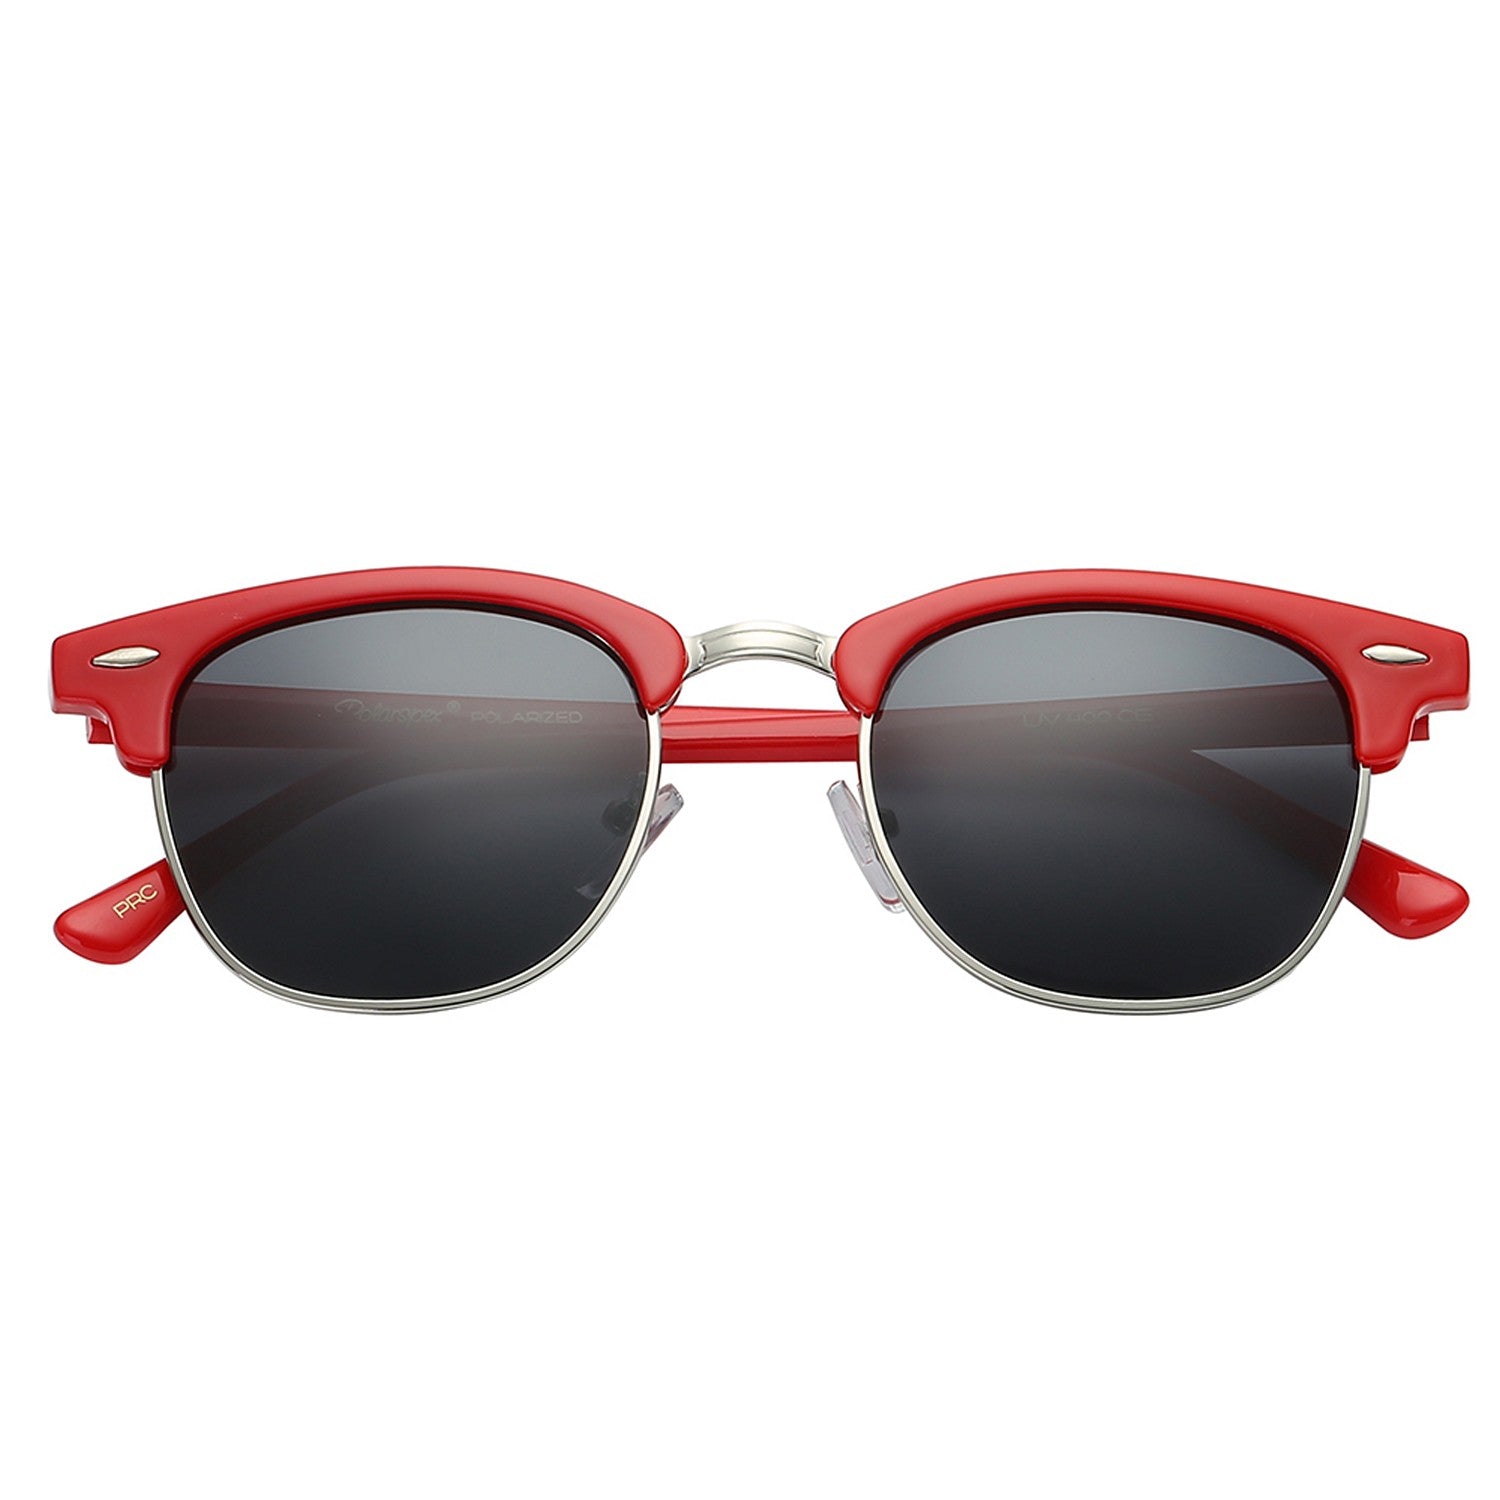 Polarspex Polarized Malcom Half Frame Semi-Rimless Style Unisex Sunglasses with Scarlet Red Frames and Smoke Lenses